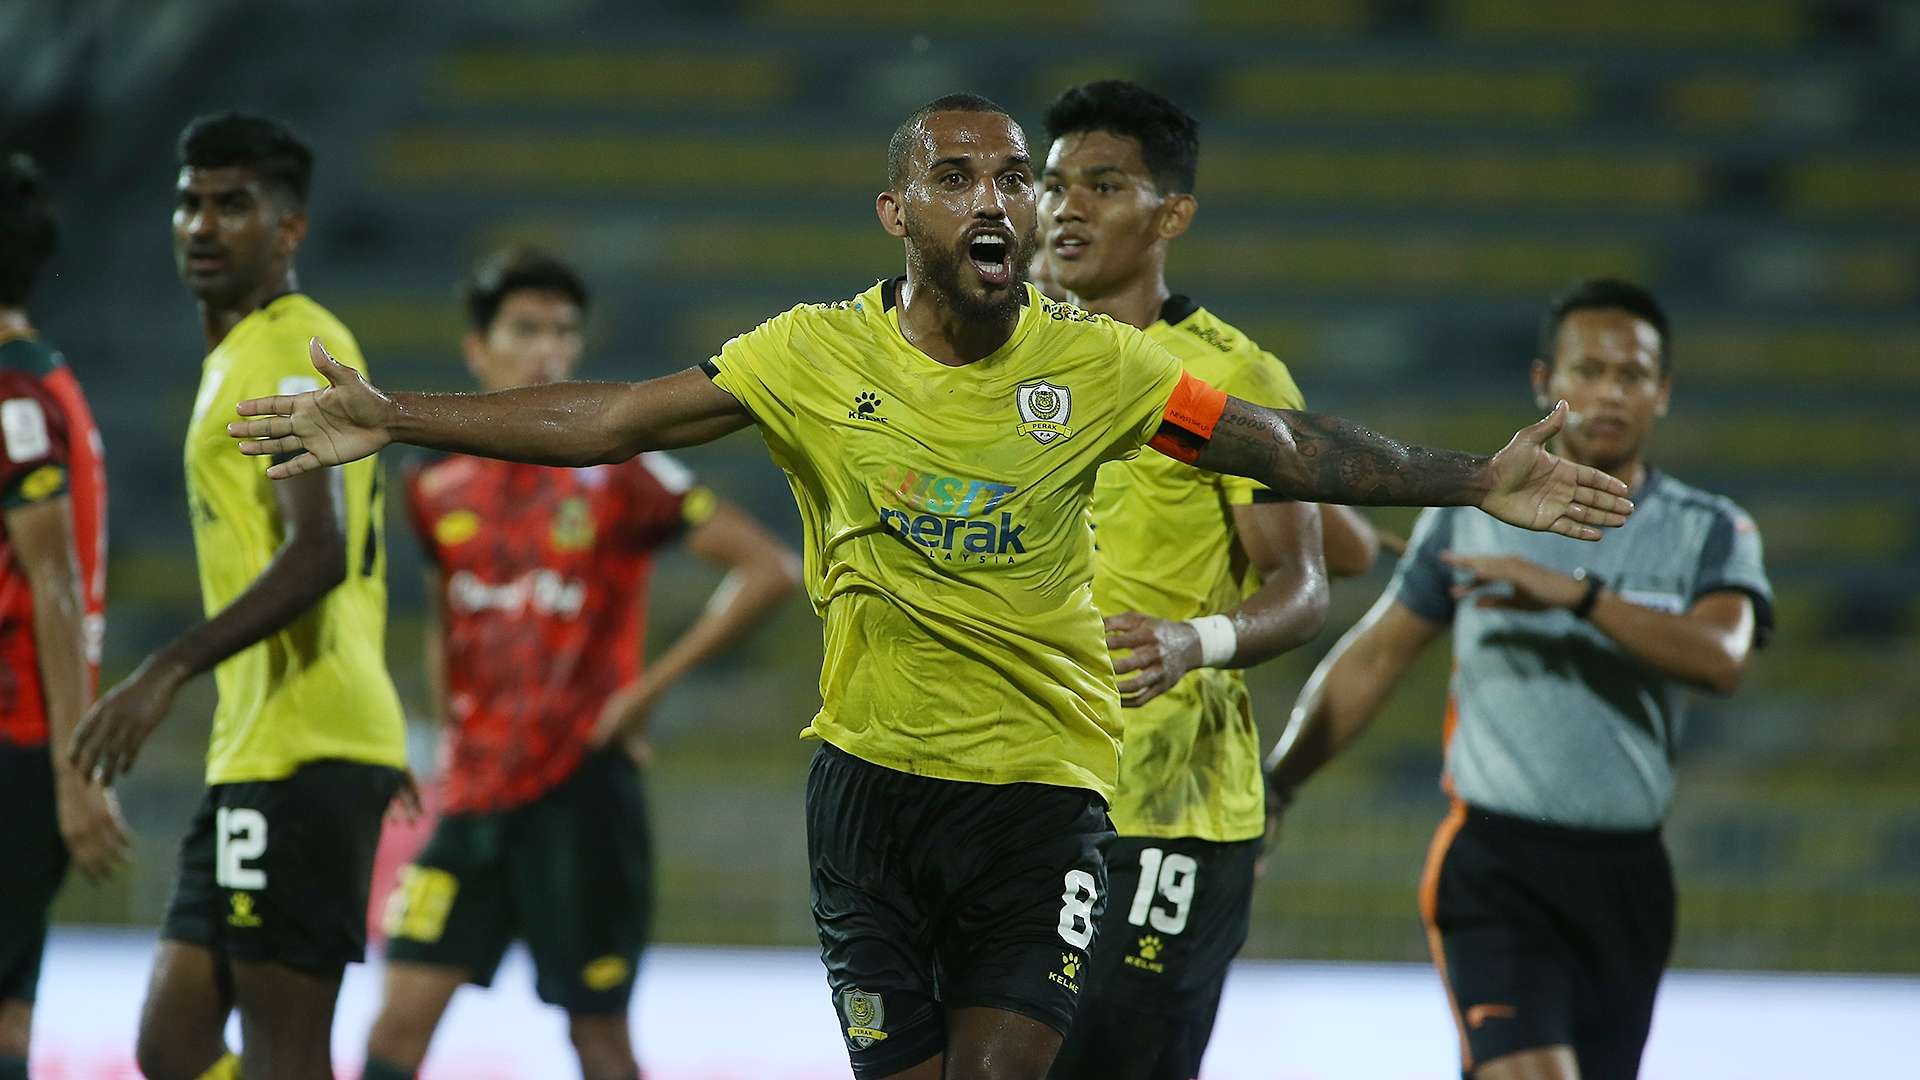 Leandro dos Santos, Perak v Kedah, Super League, 11 Oct 2020